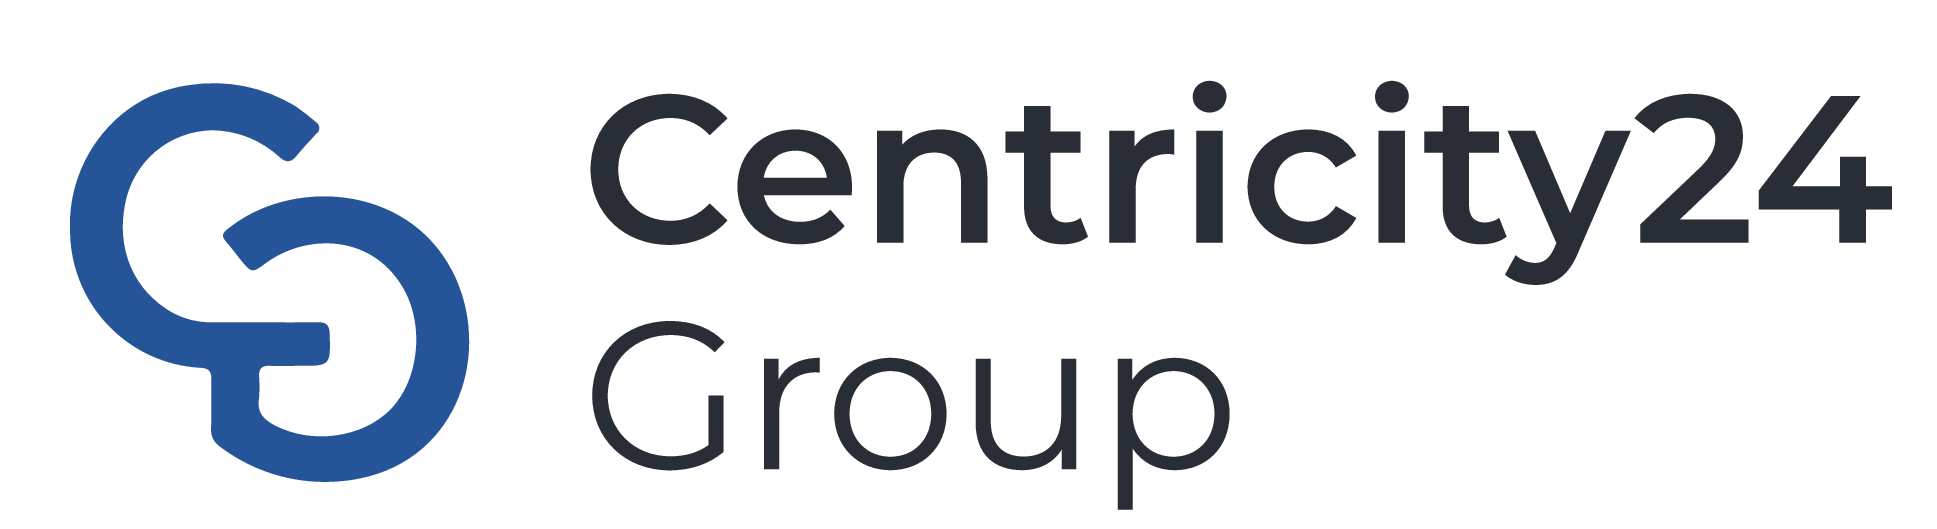 Centricity24 Group